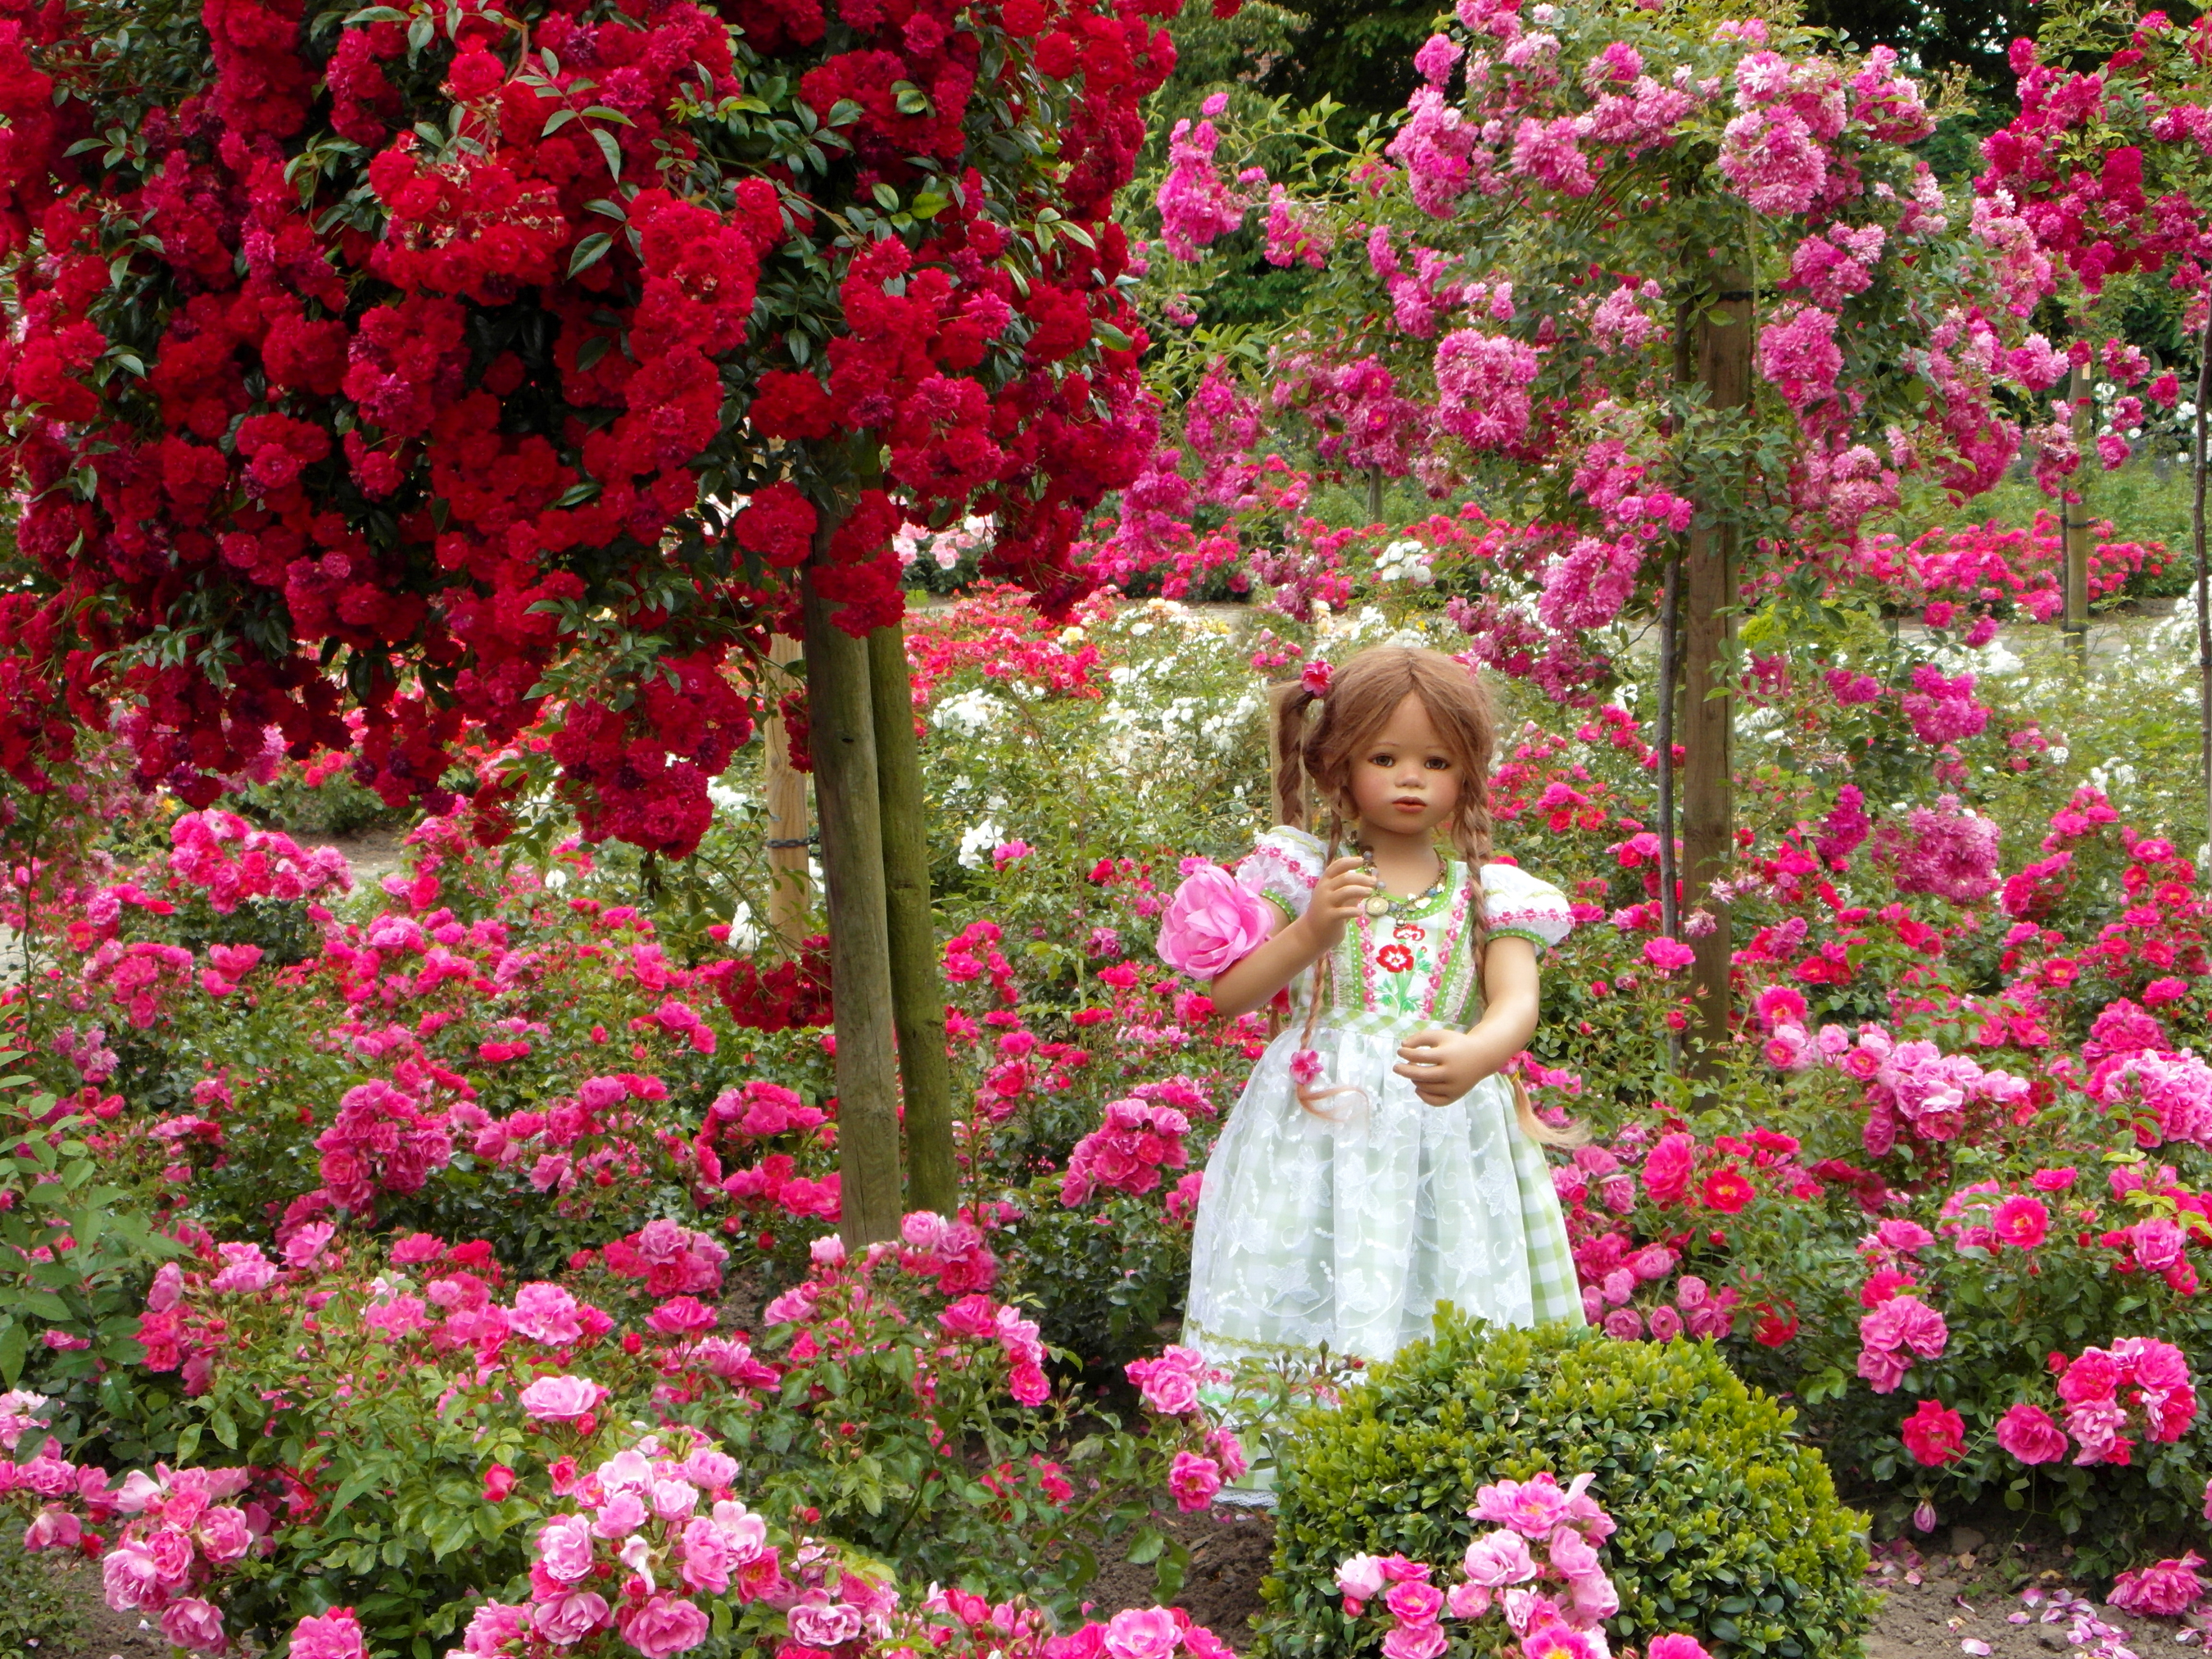 В саду гудят. Розовый сад Баден-Баден Германия. Гюлистан-сад роз. Сад с цветами.